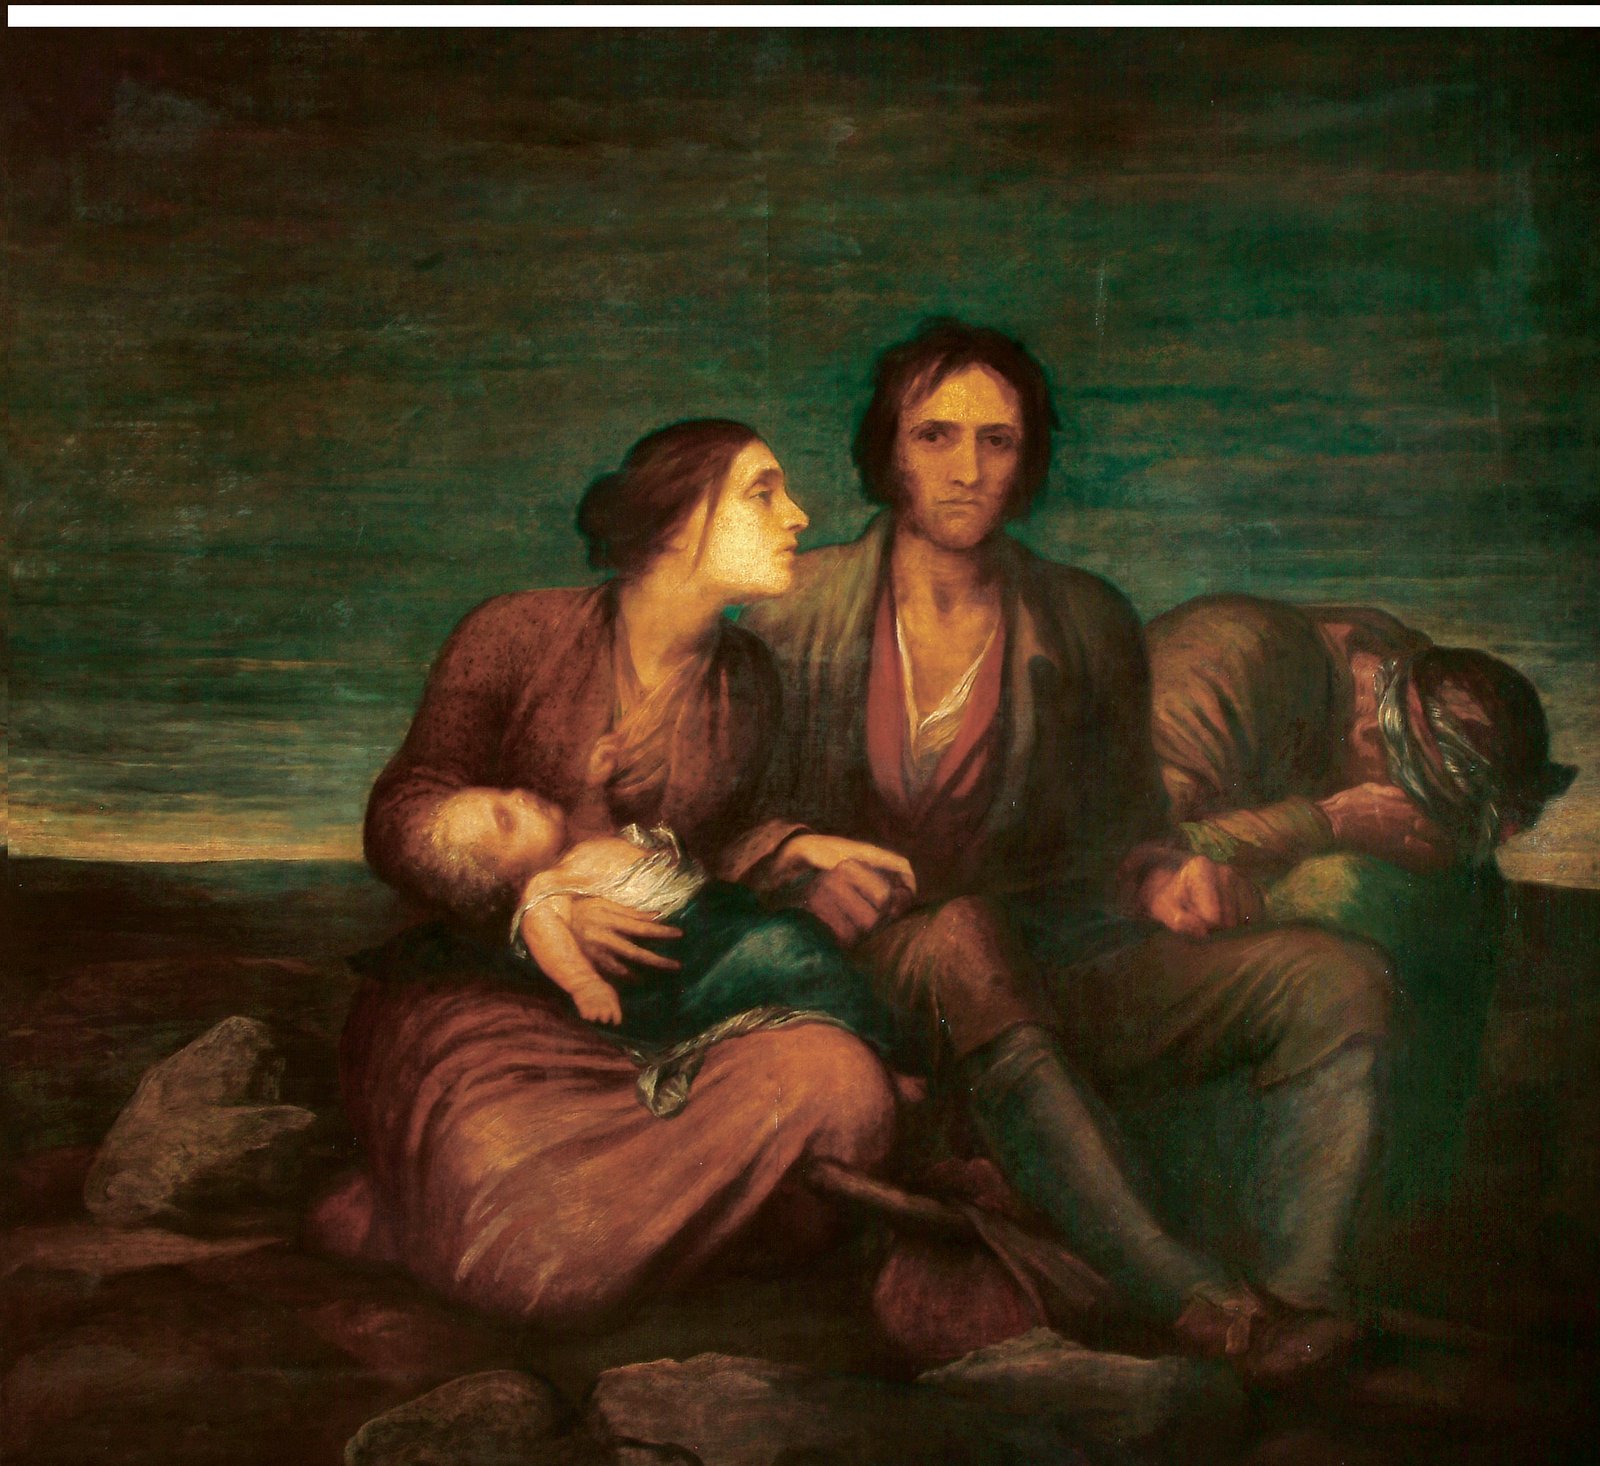 Image - G F Watts, The Irish Famine, c. 1848-50, oil on canvas. Image courtesy of Watts Gallery Trust.